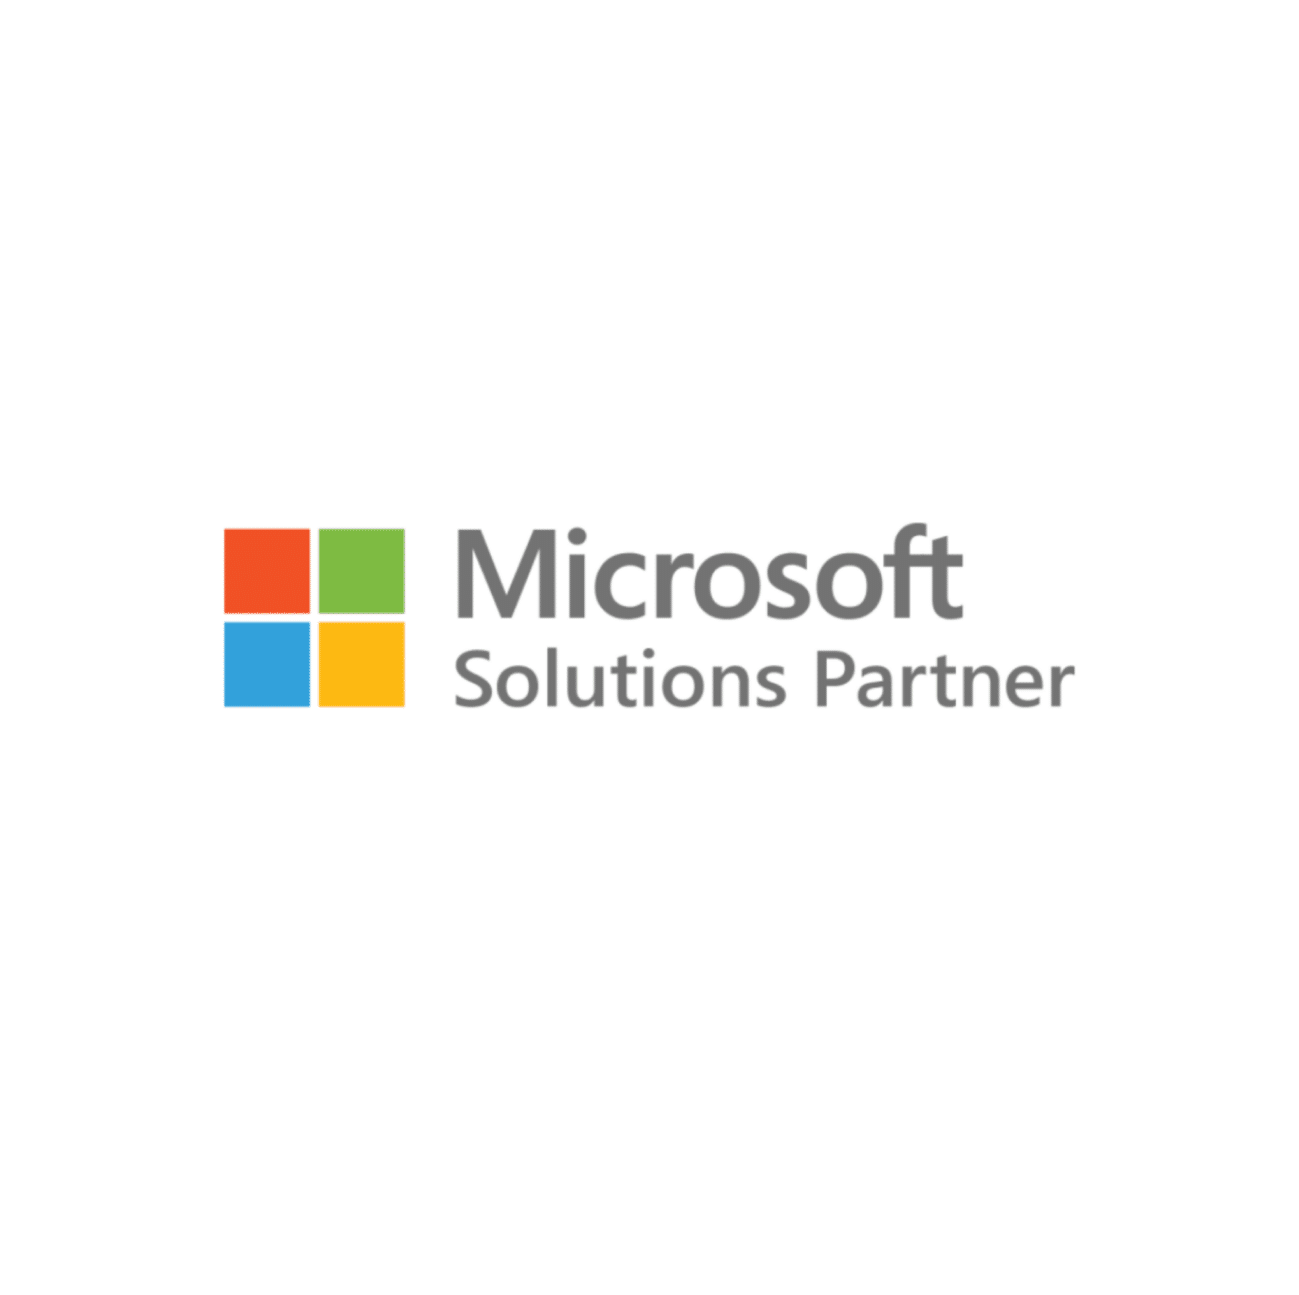 a_designated_microsoft_solutions_partner_image